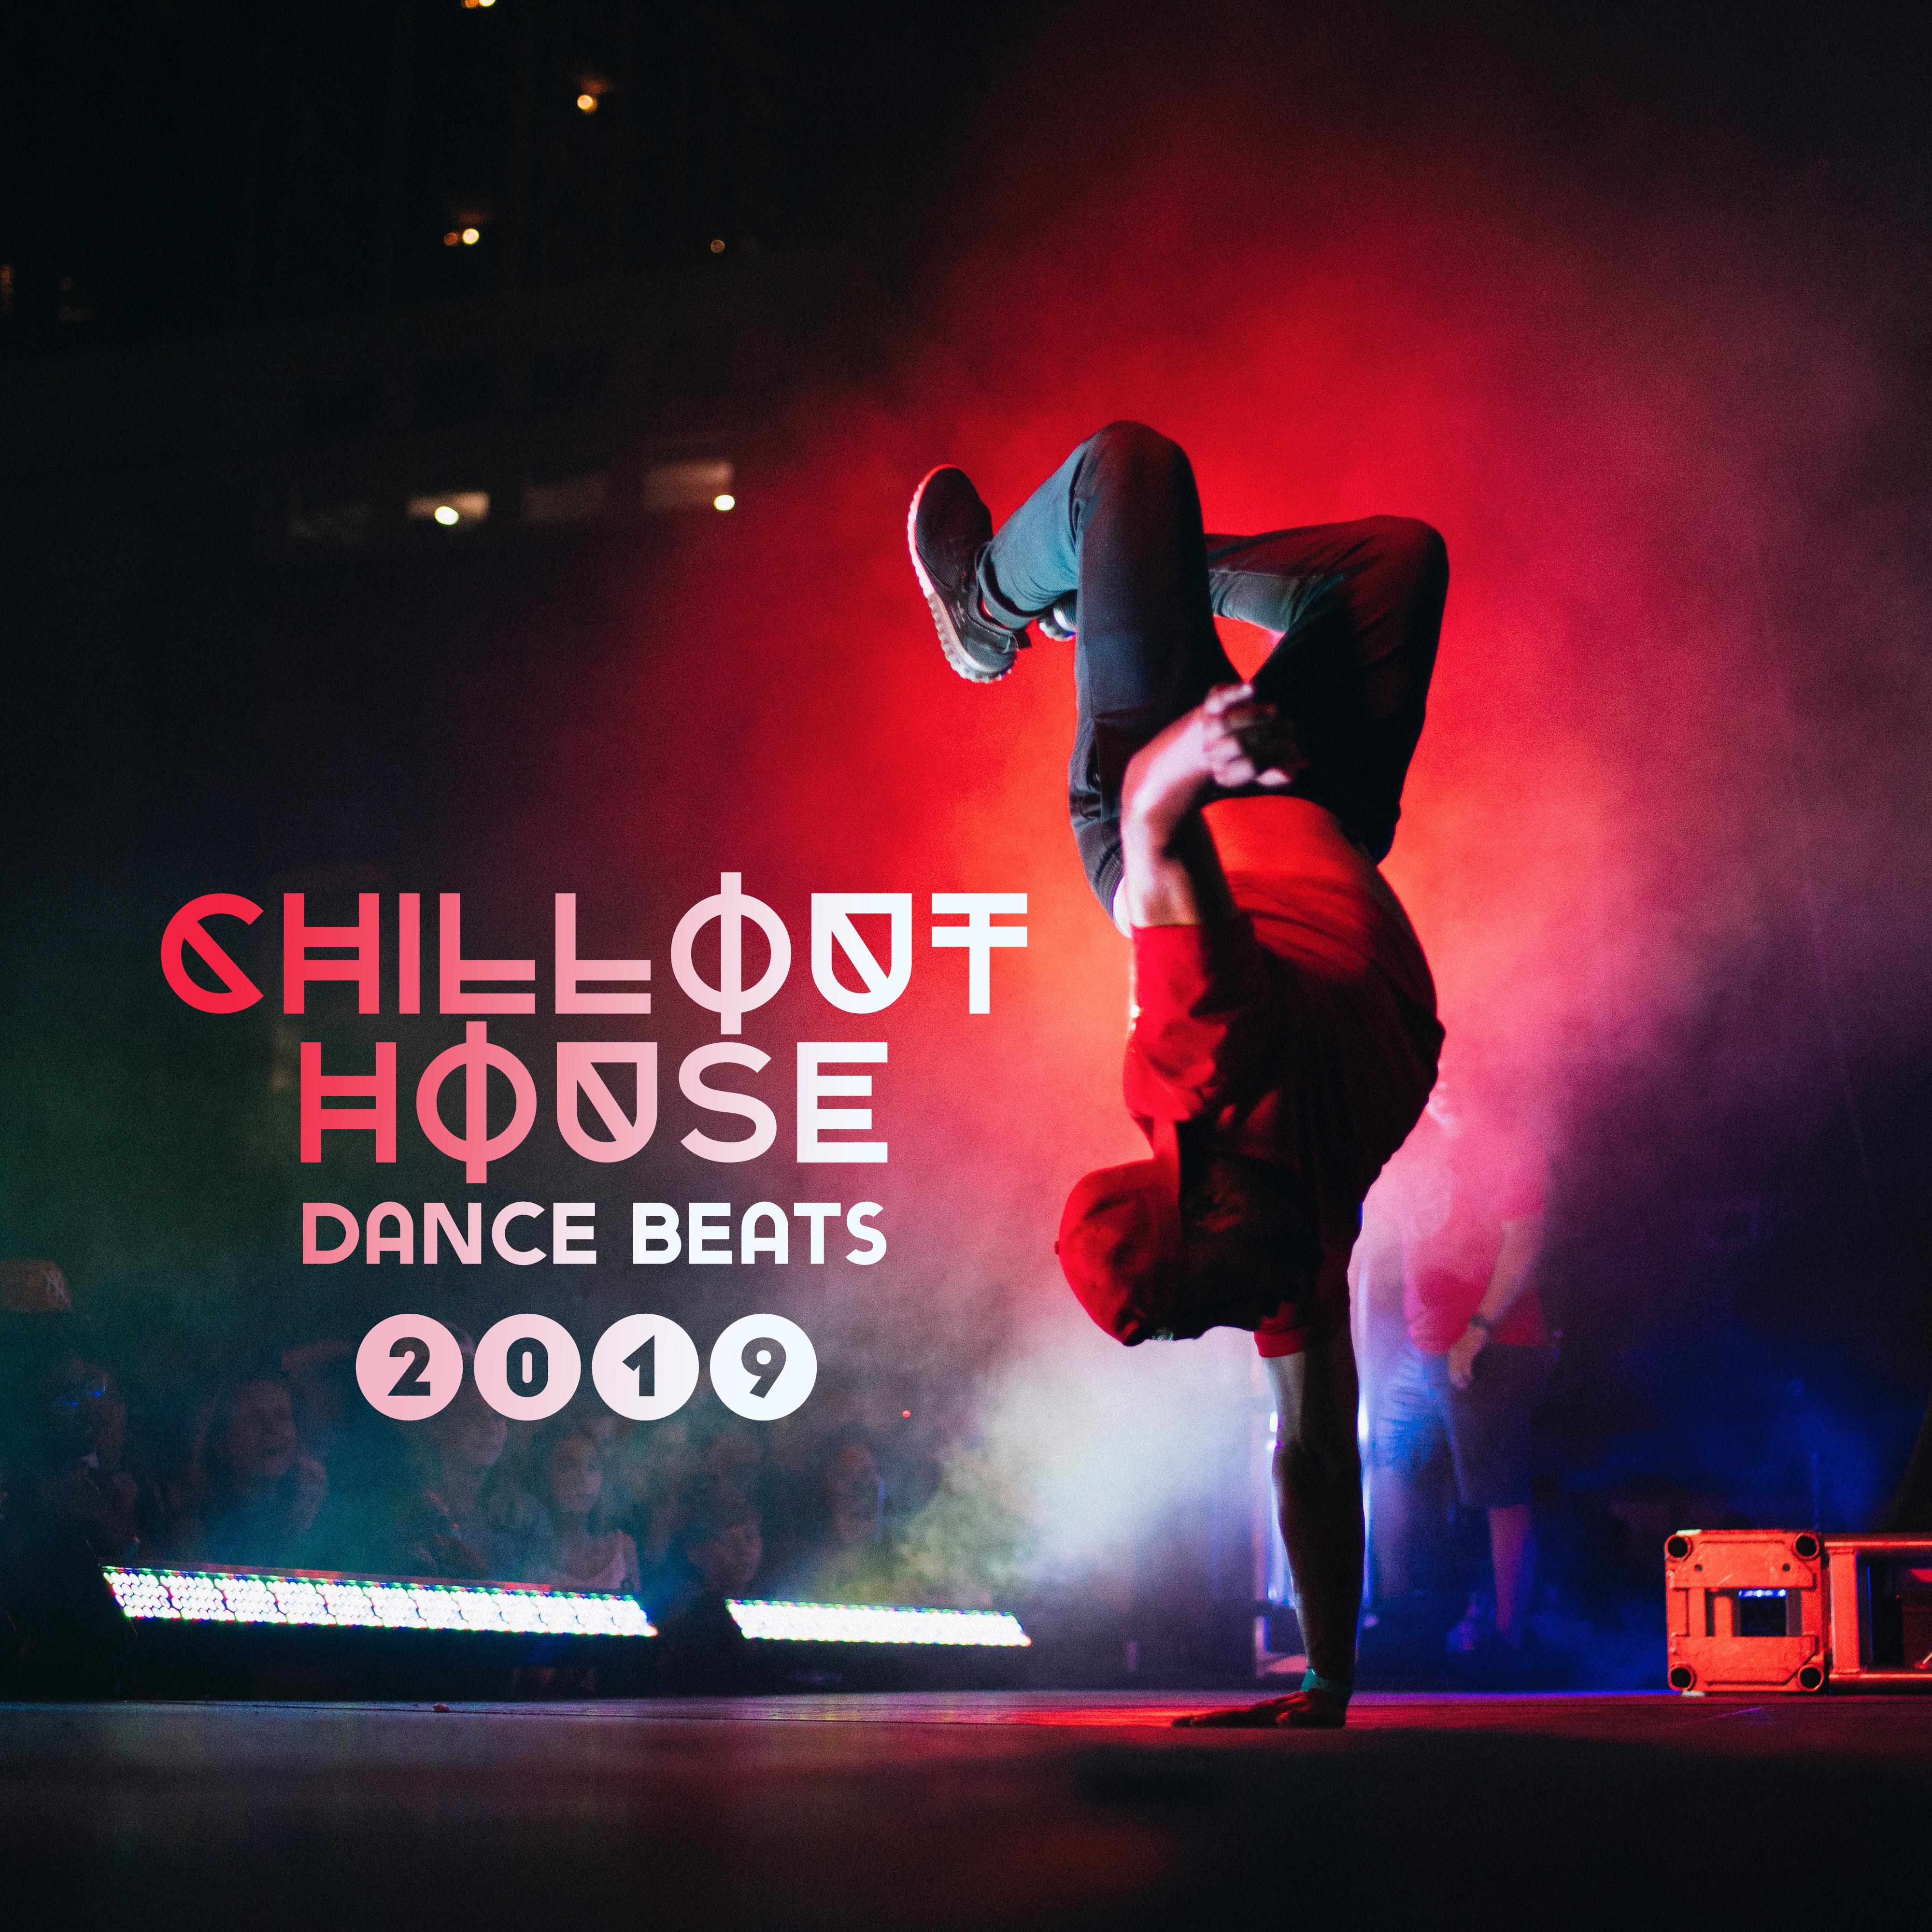 Chillout House Dance Beats 2019